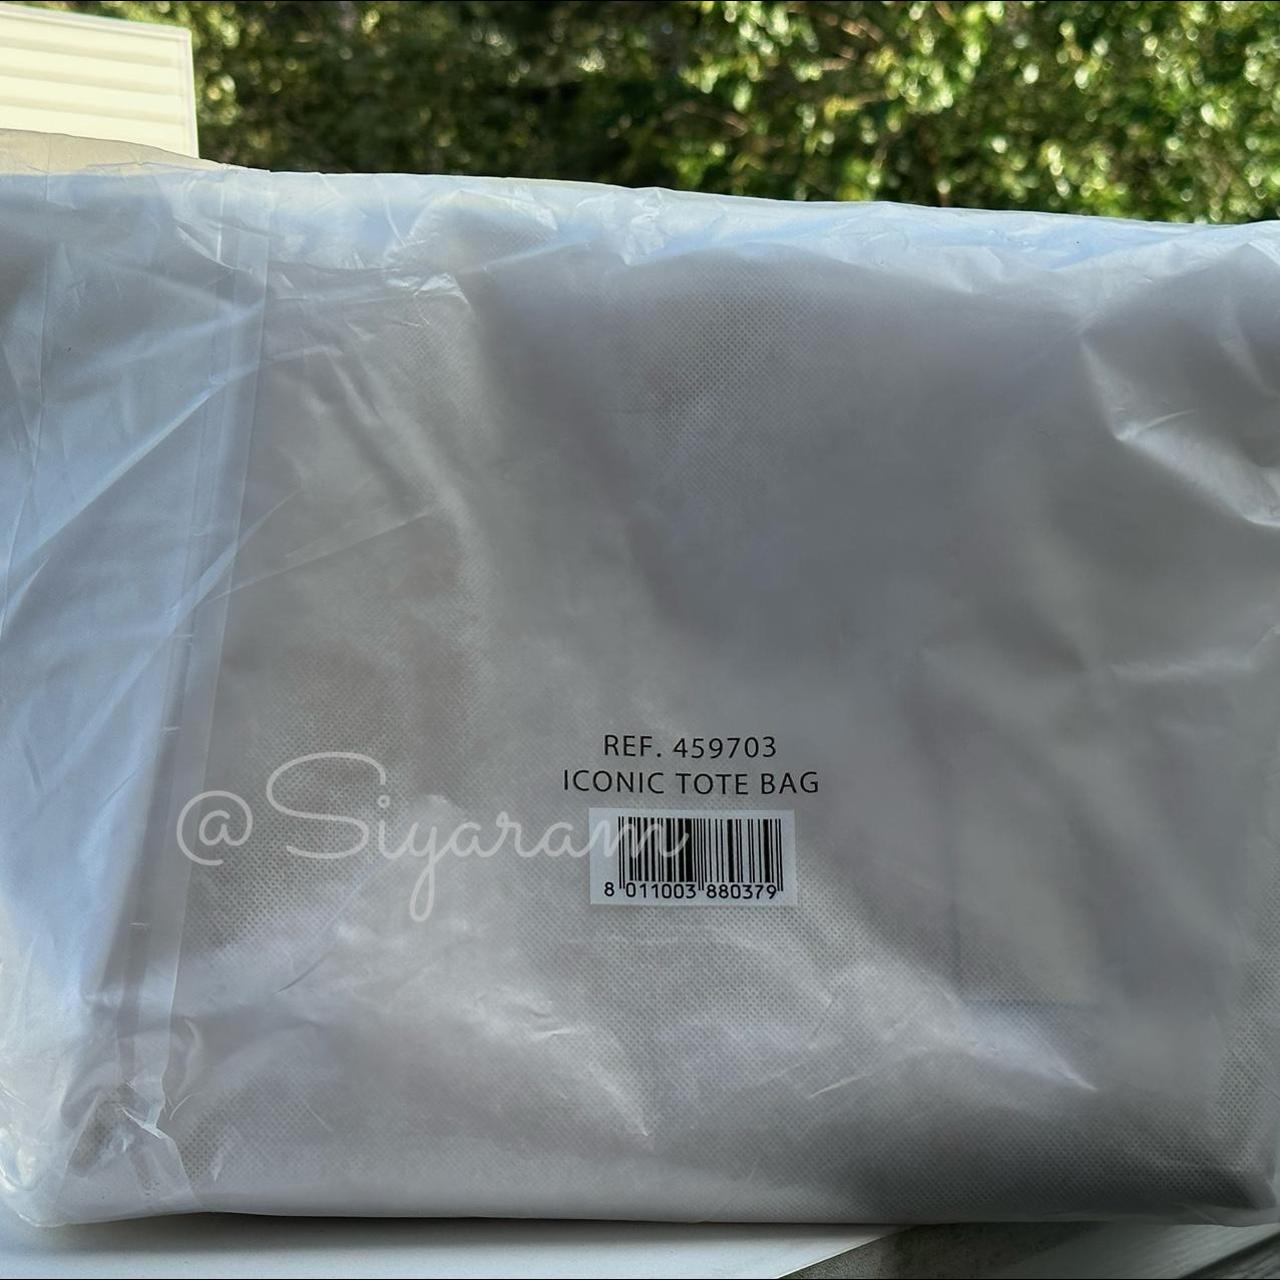 MK tote bag brand new with tag original price $448 - Depop